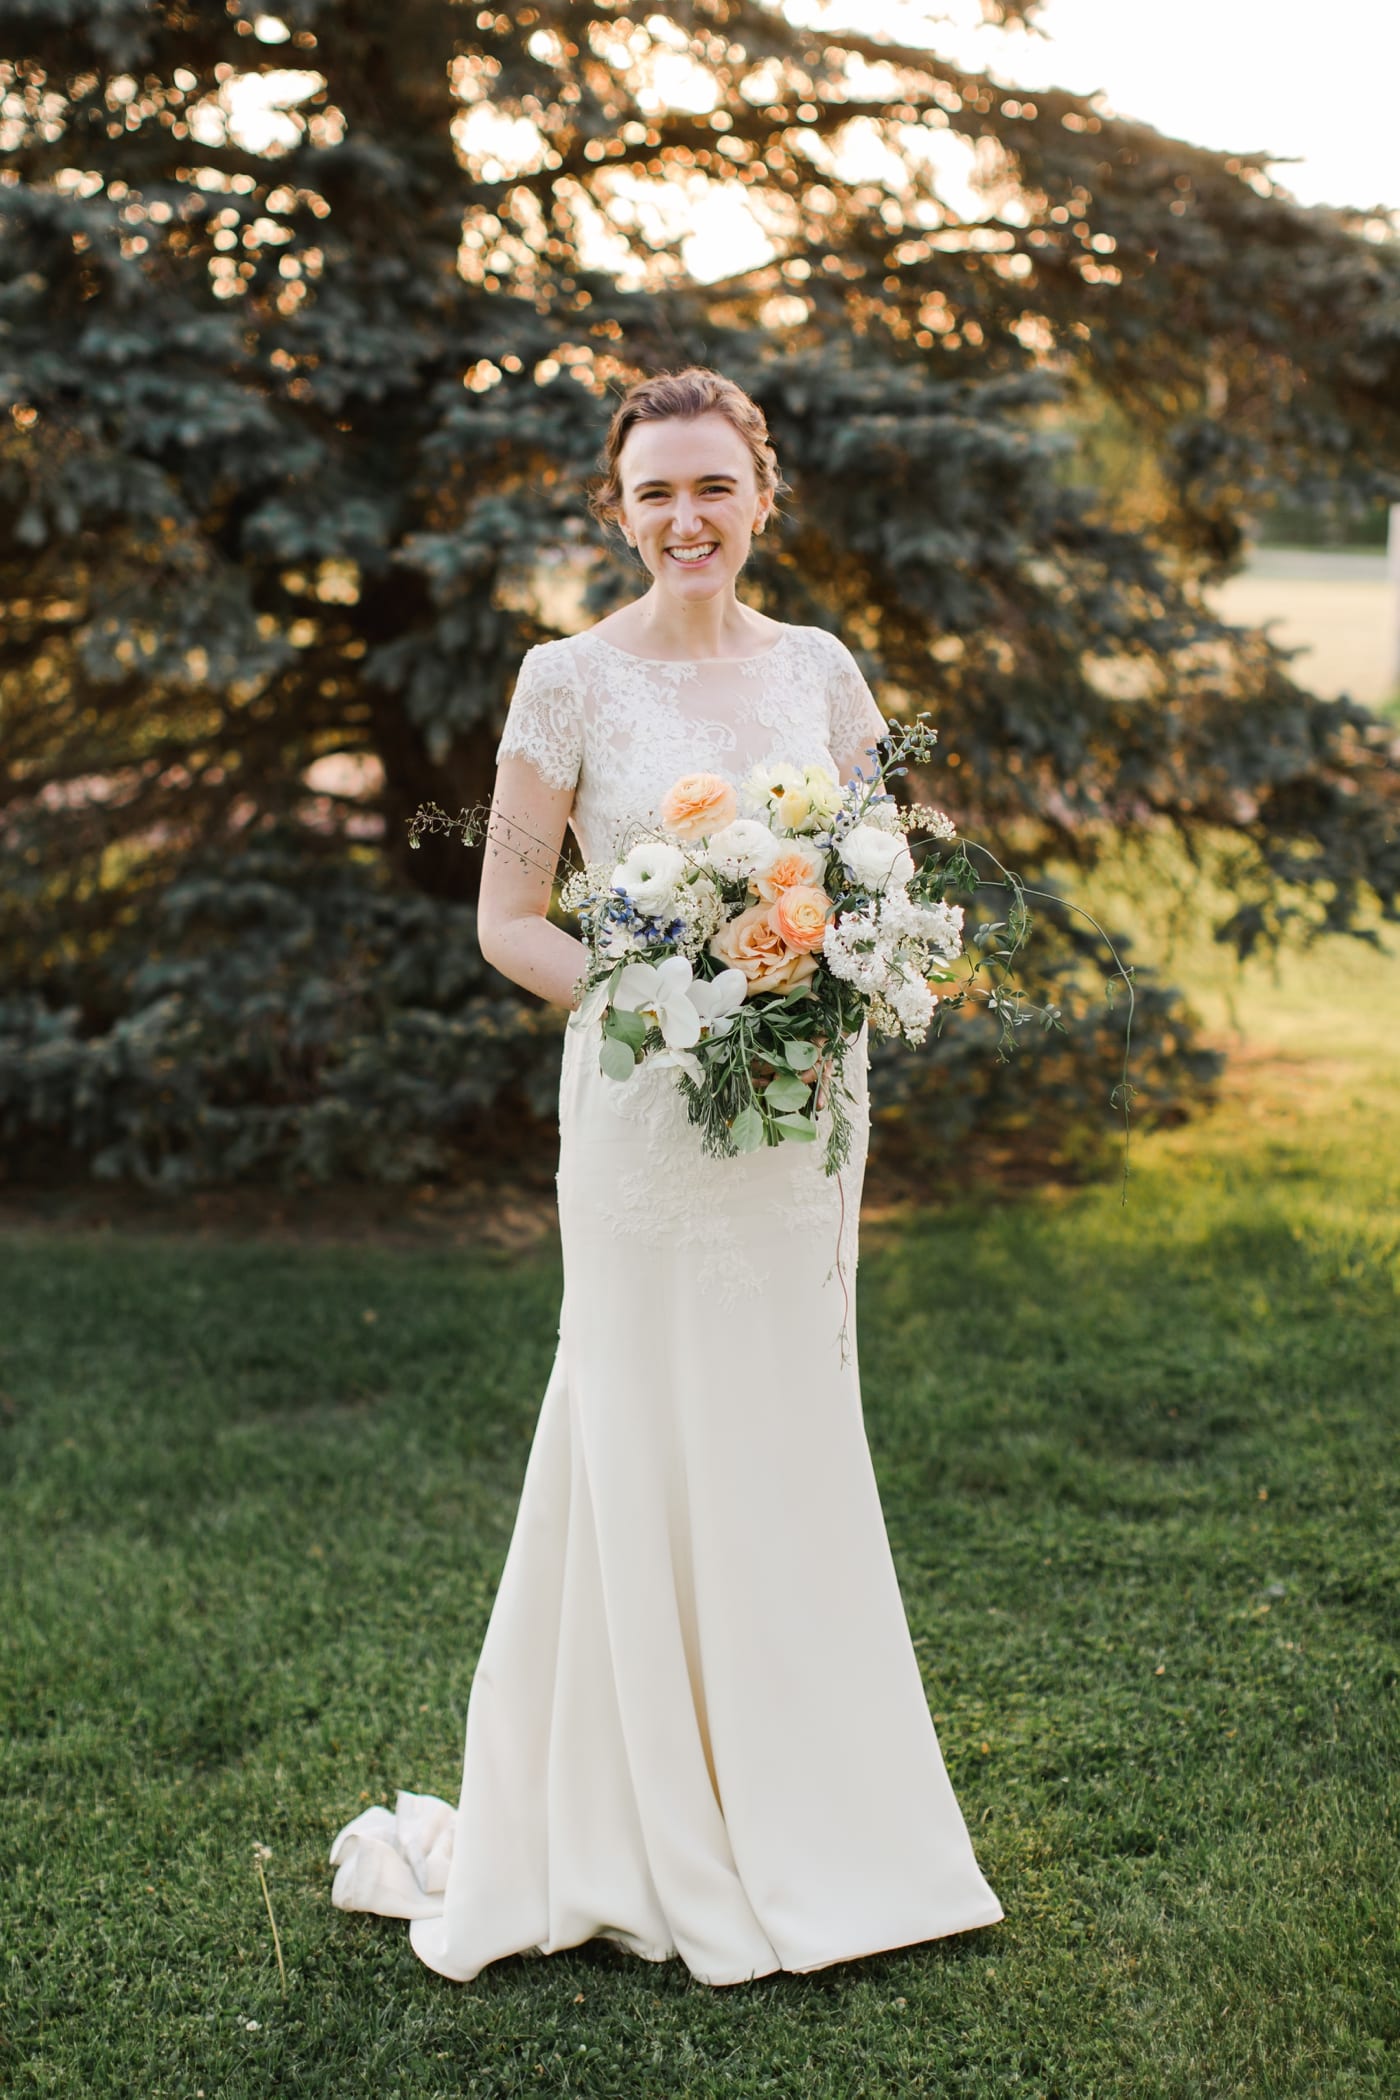 Sunset bride and groom portraits for a backyard wedding